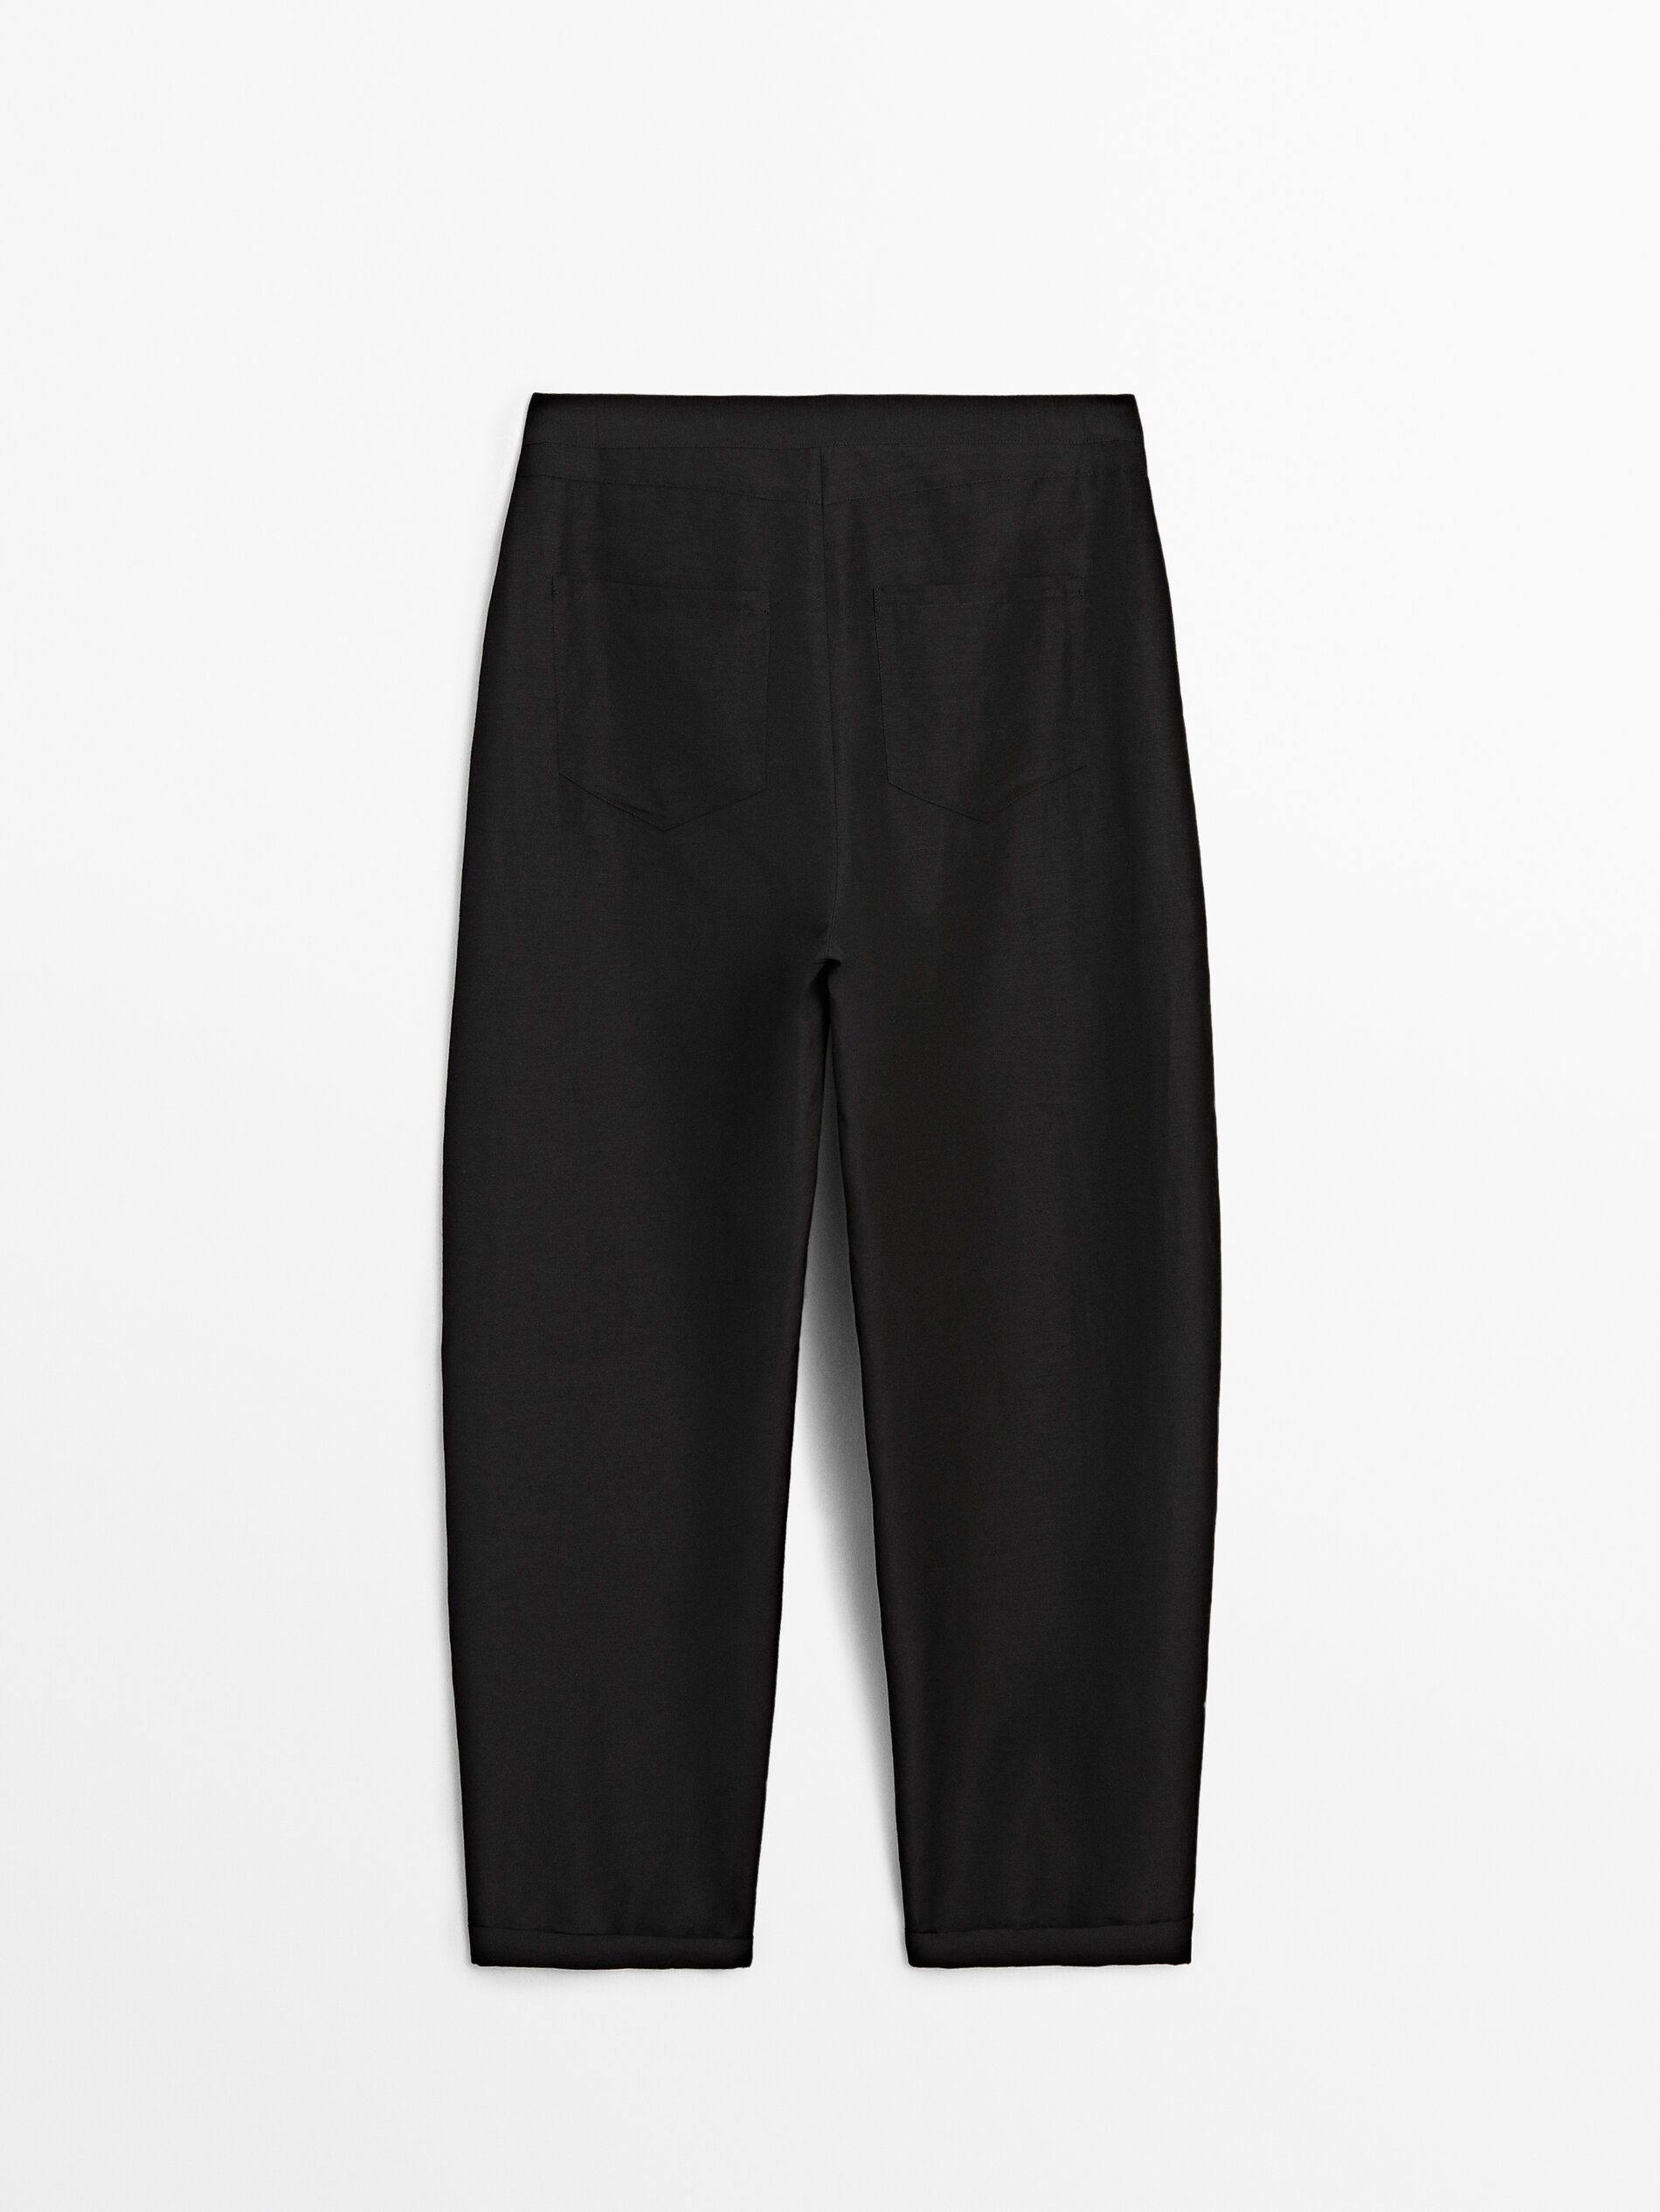 Buy Men Navy Textured Carrot Fit Trousers Online - 445288 | Peter England